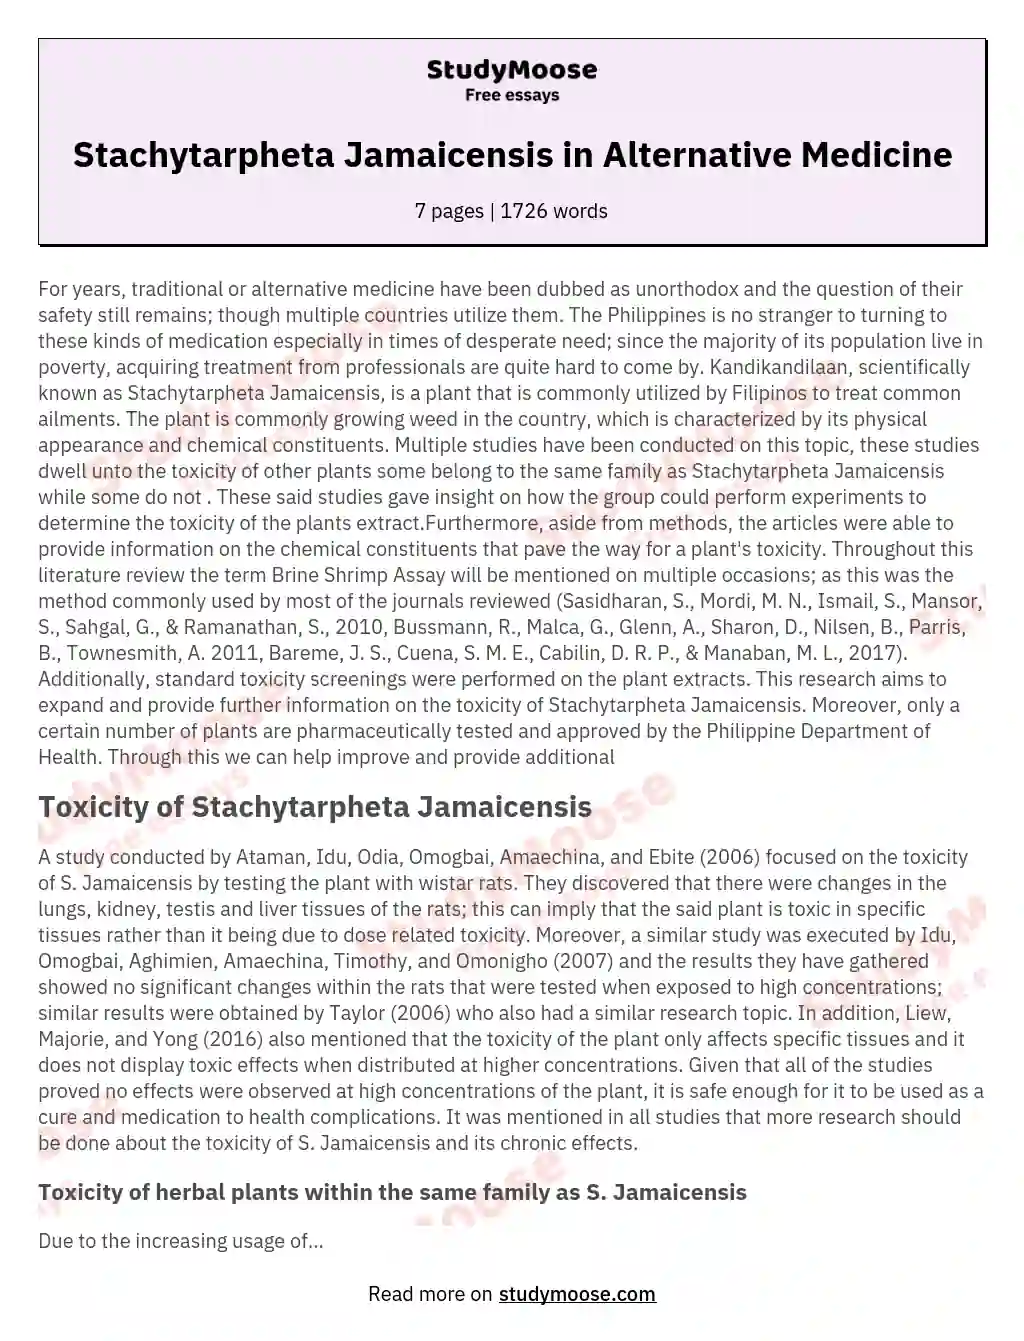 Stachytarpheta Jamaicensis in Alternative Medicine